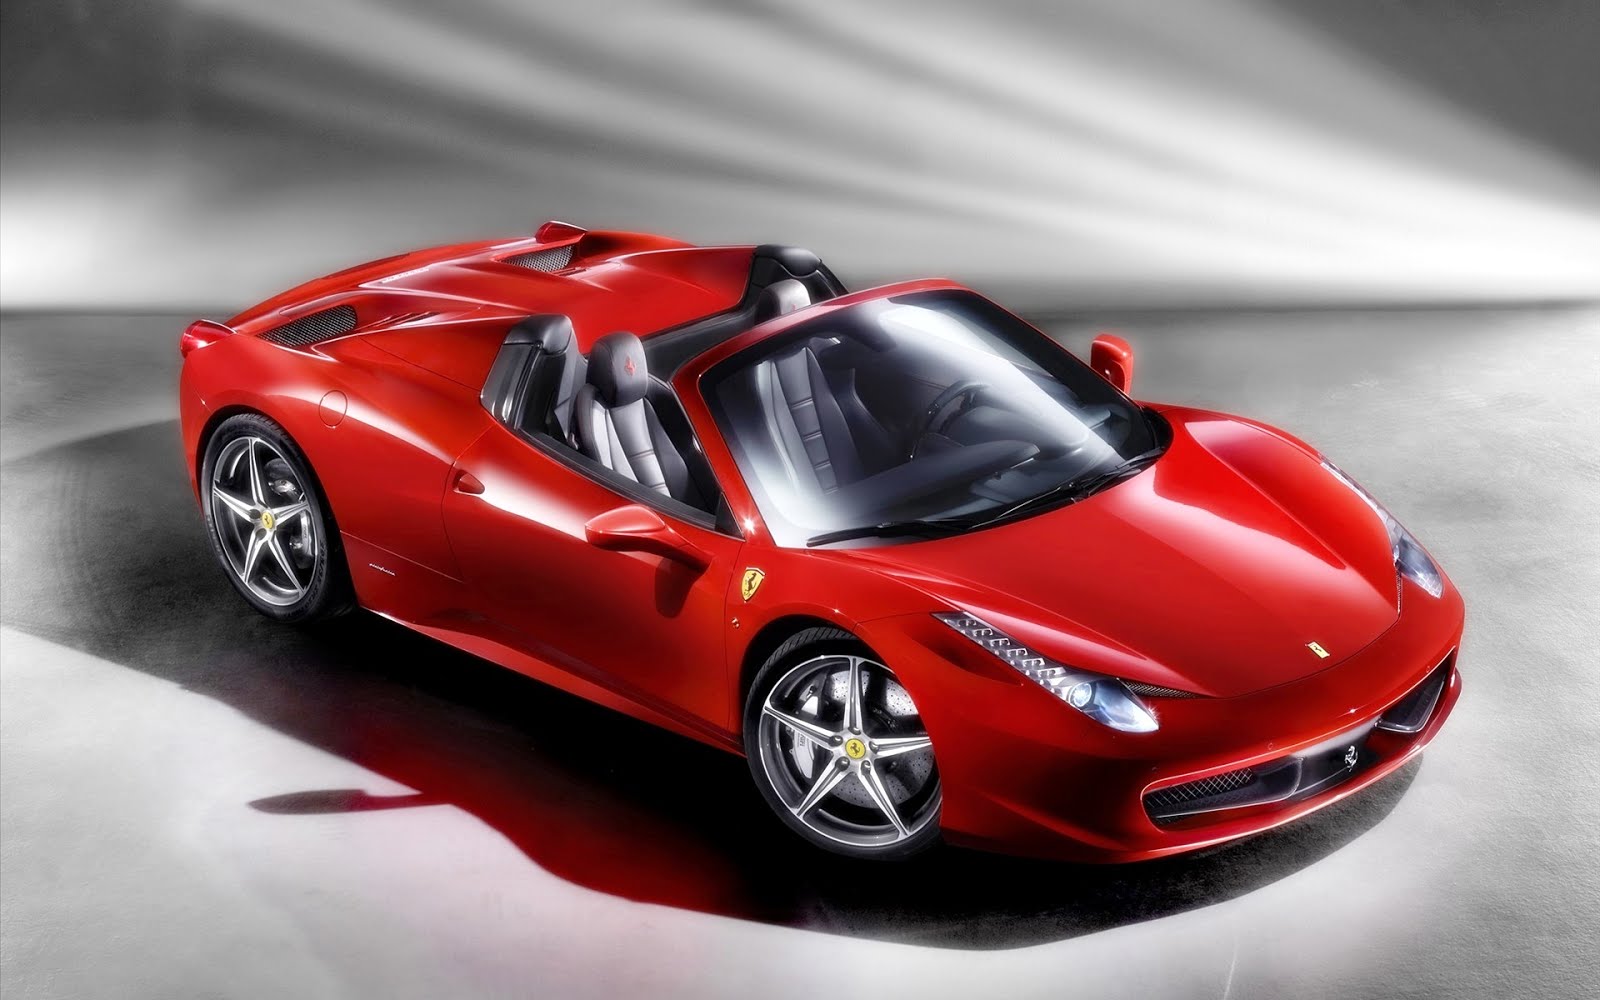 http://4.bp.blogspot.com/-FoaBObdsGT0/UVP_-PwWqJI/AAAAAAAABDQ/WRQkP5DksXg/s1600/Ferrari-Cars-Wallpaper-0-712142.jpg